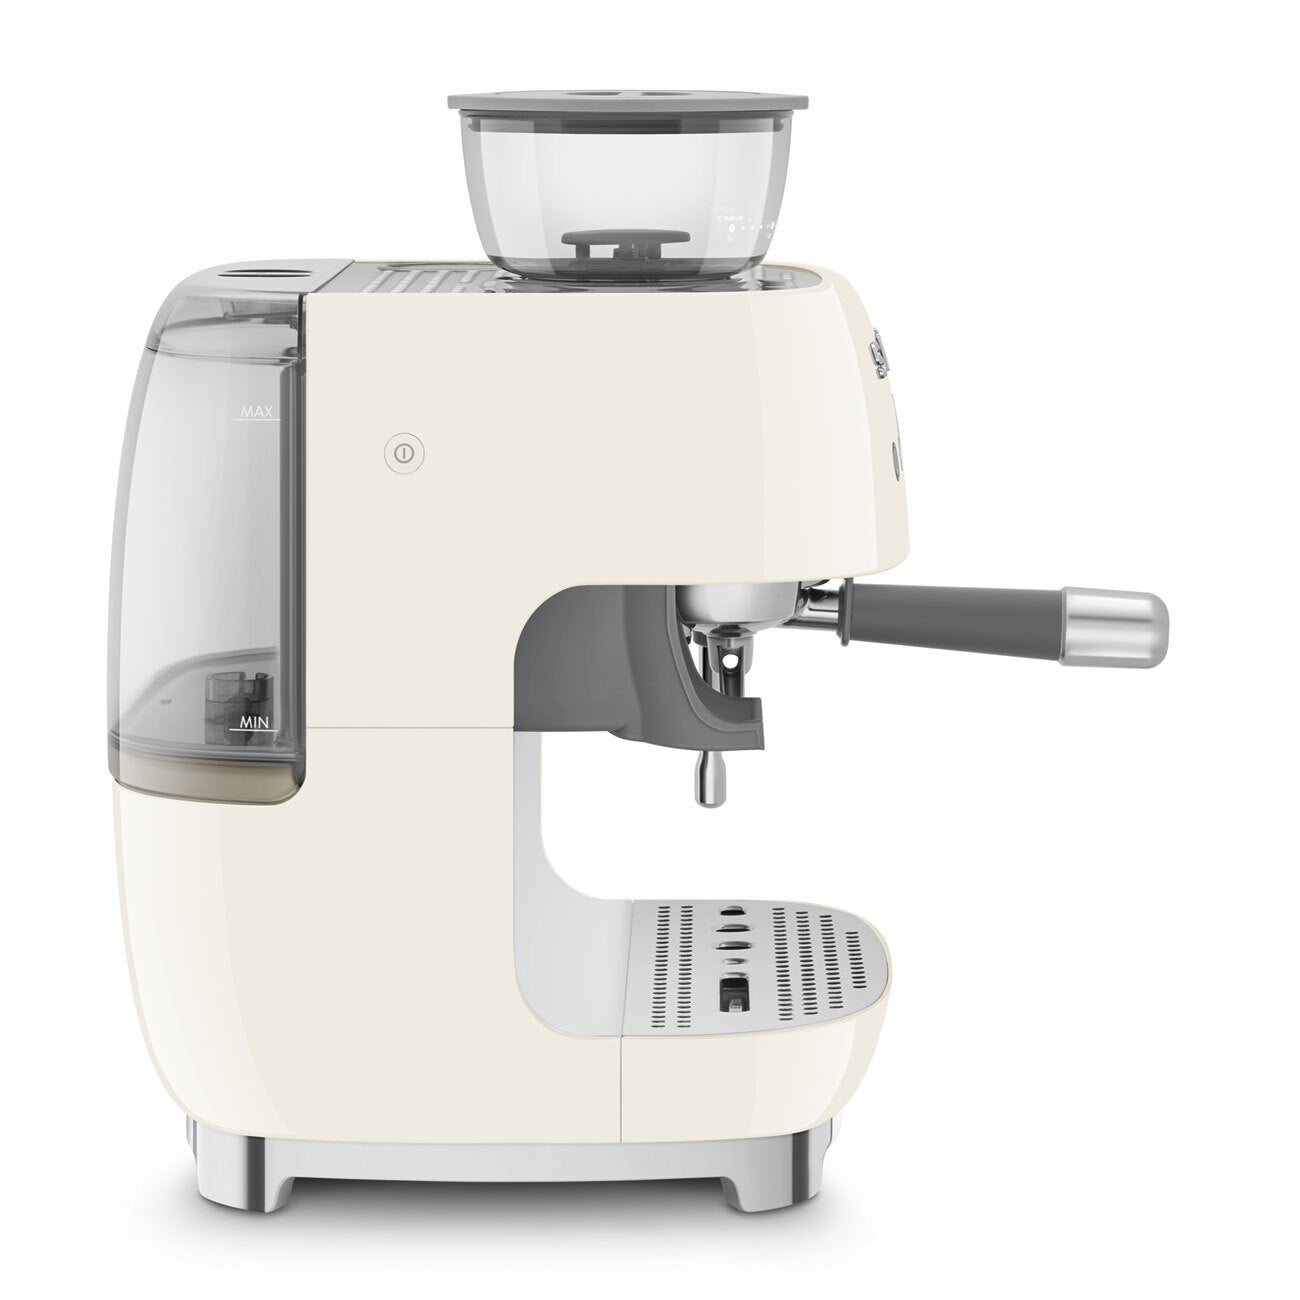 Smeg Manual Espresso Machine w/ Grinder - Sneak Peek & Review